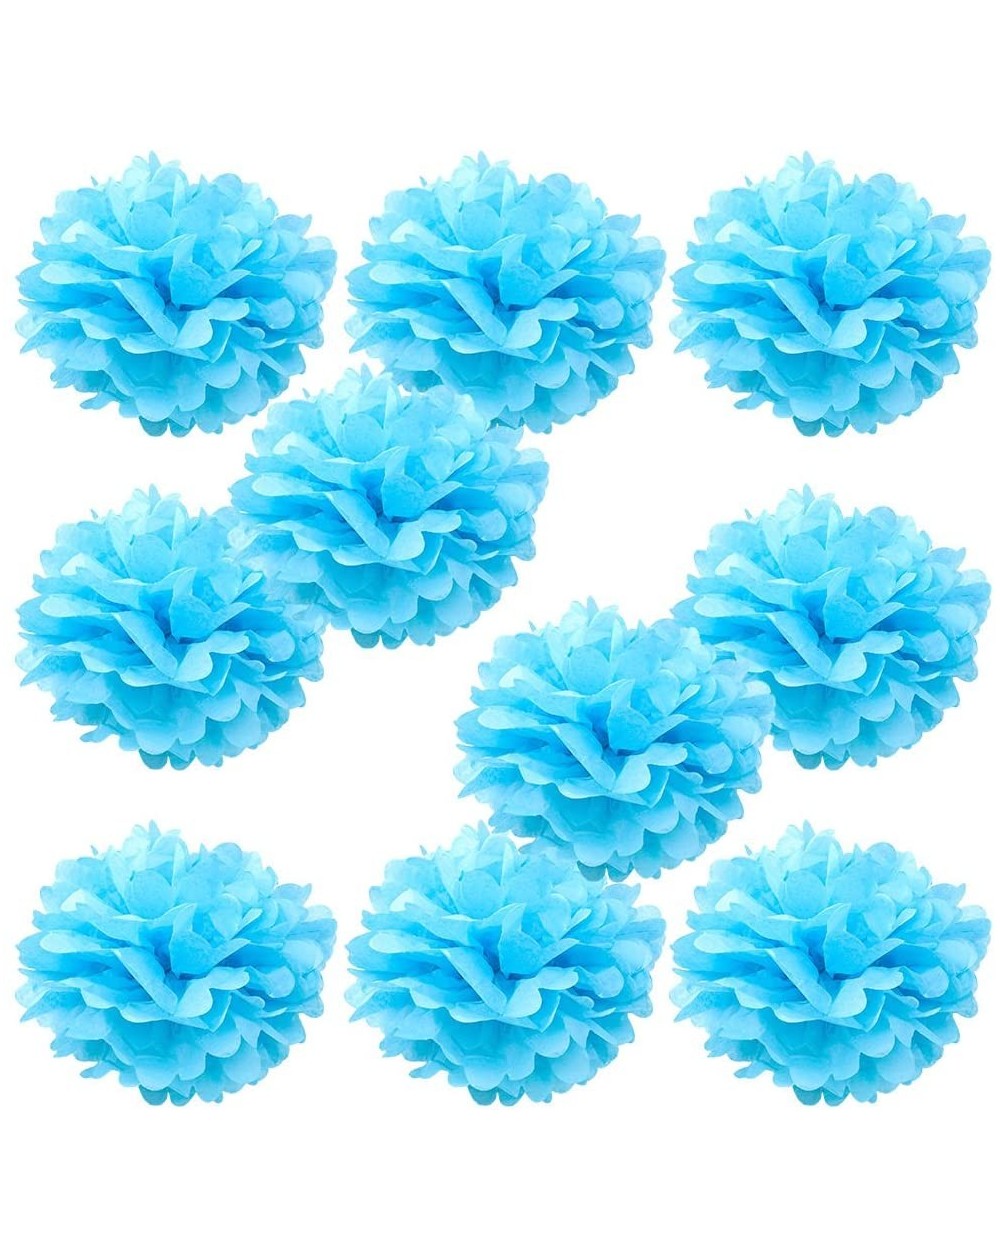 Tissue Pom Poms Set of 10 - Aqua Blue 8" - (10 Pack) Tissue Pom Poms Flower Party Decorations for Weddings- Birthday- Bridal-...